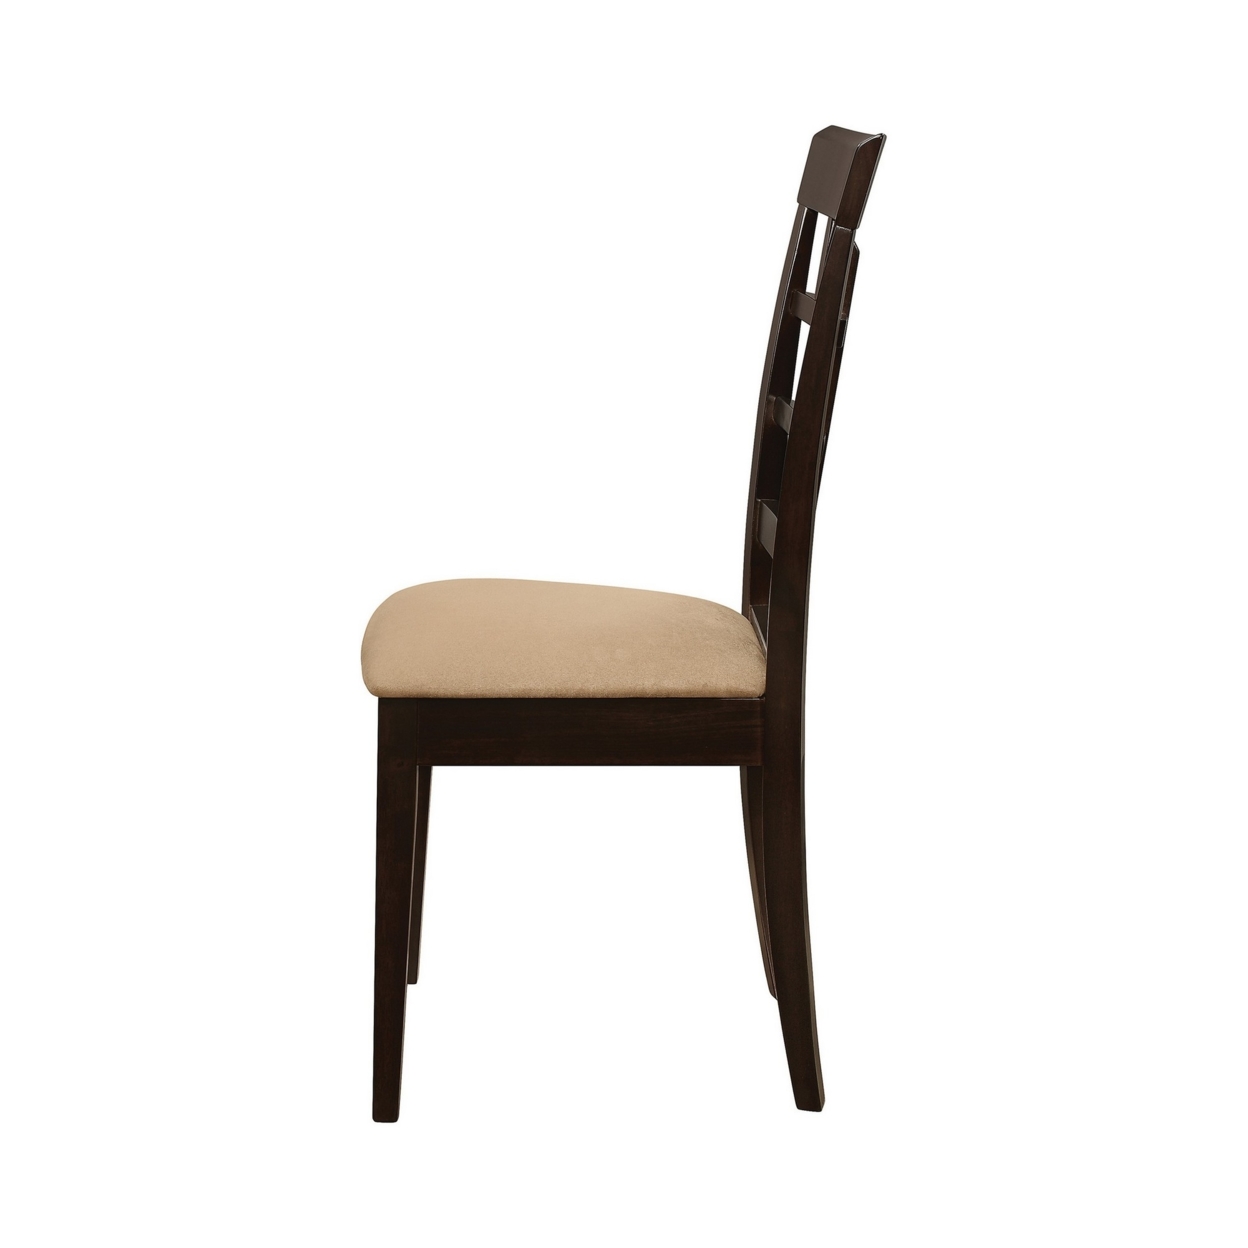 17 Inch Side Dining Chair, Set Of 2, Lattice Back Brown Wood, Tan Fabric- Saltoro Sherpi